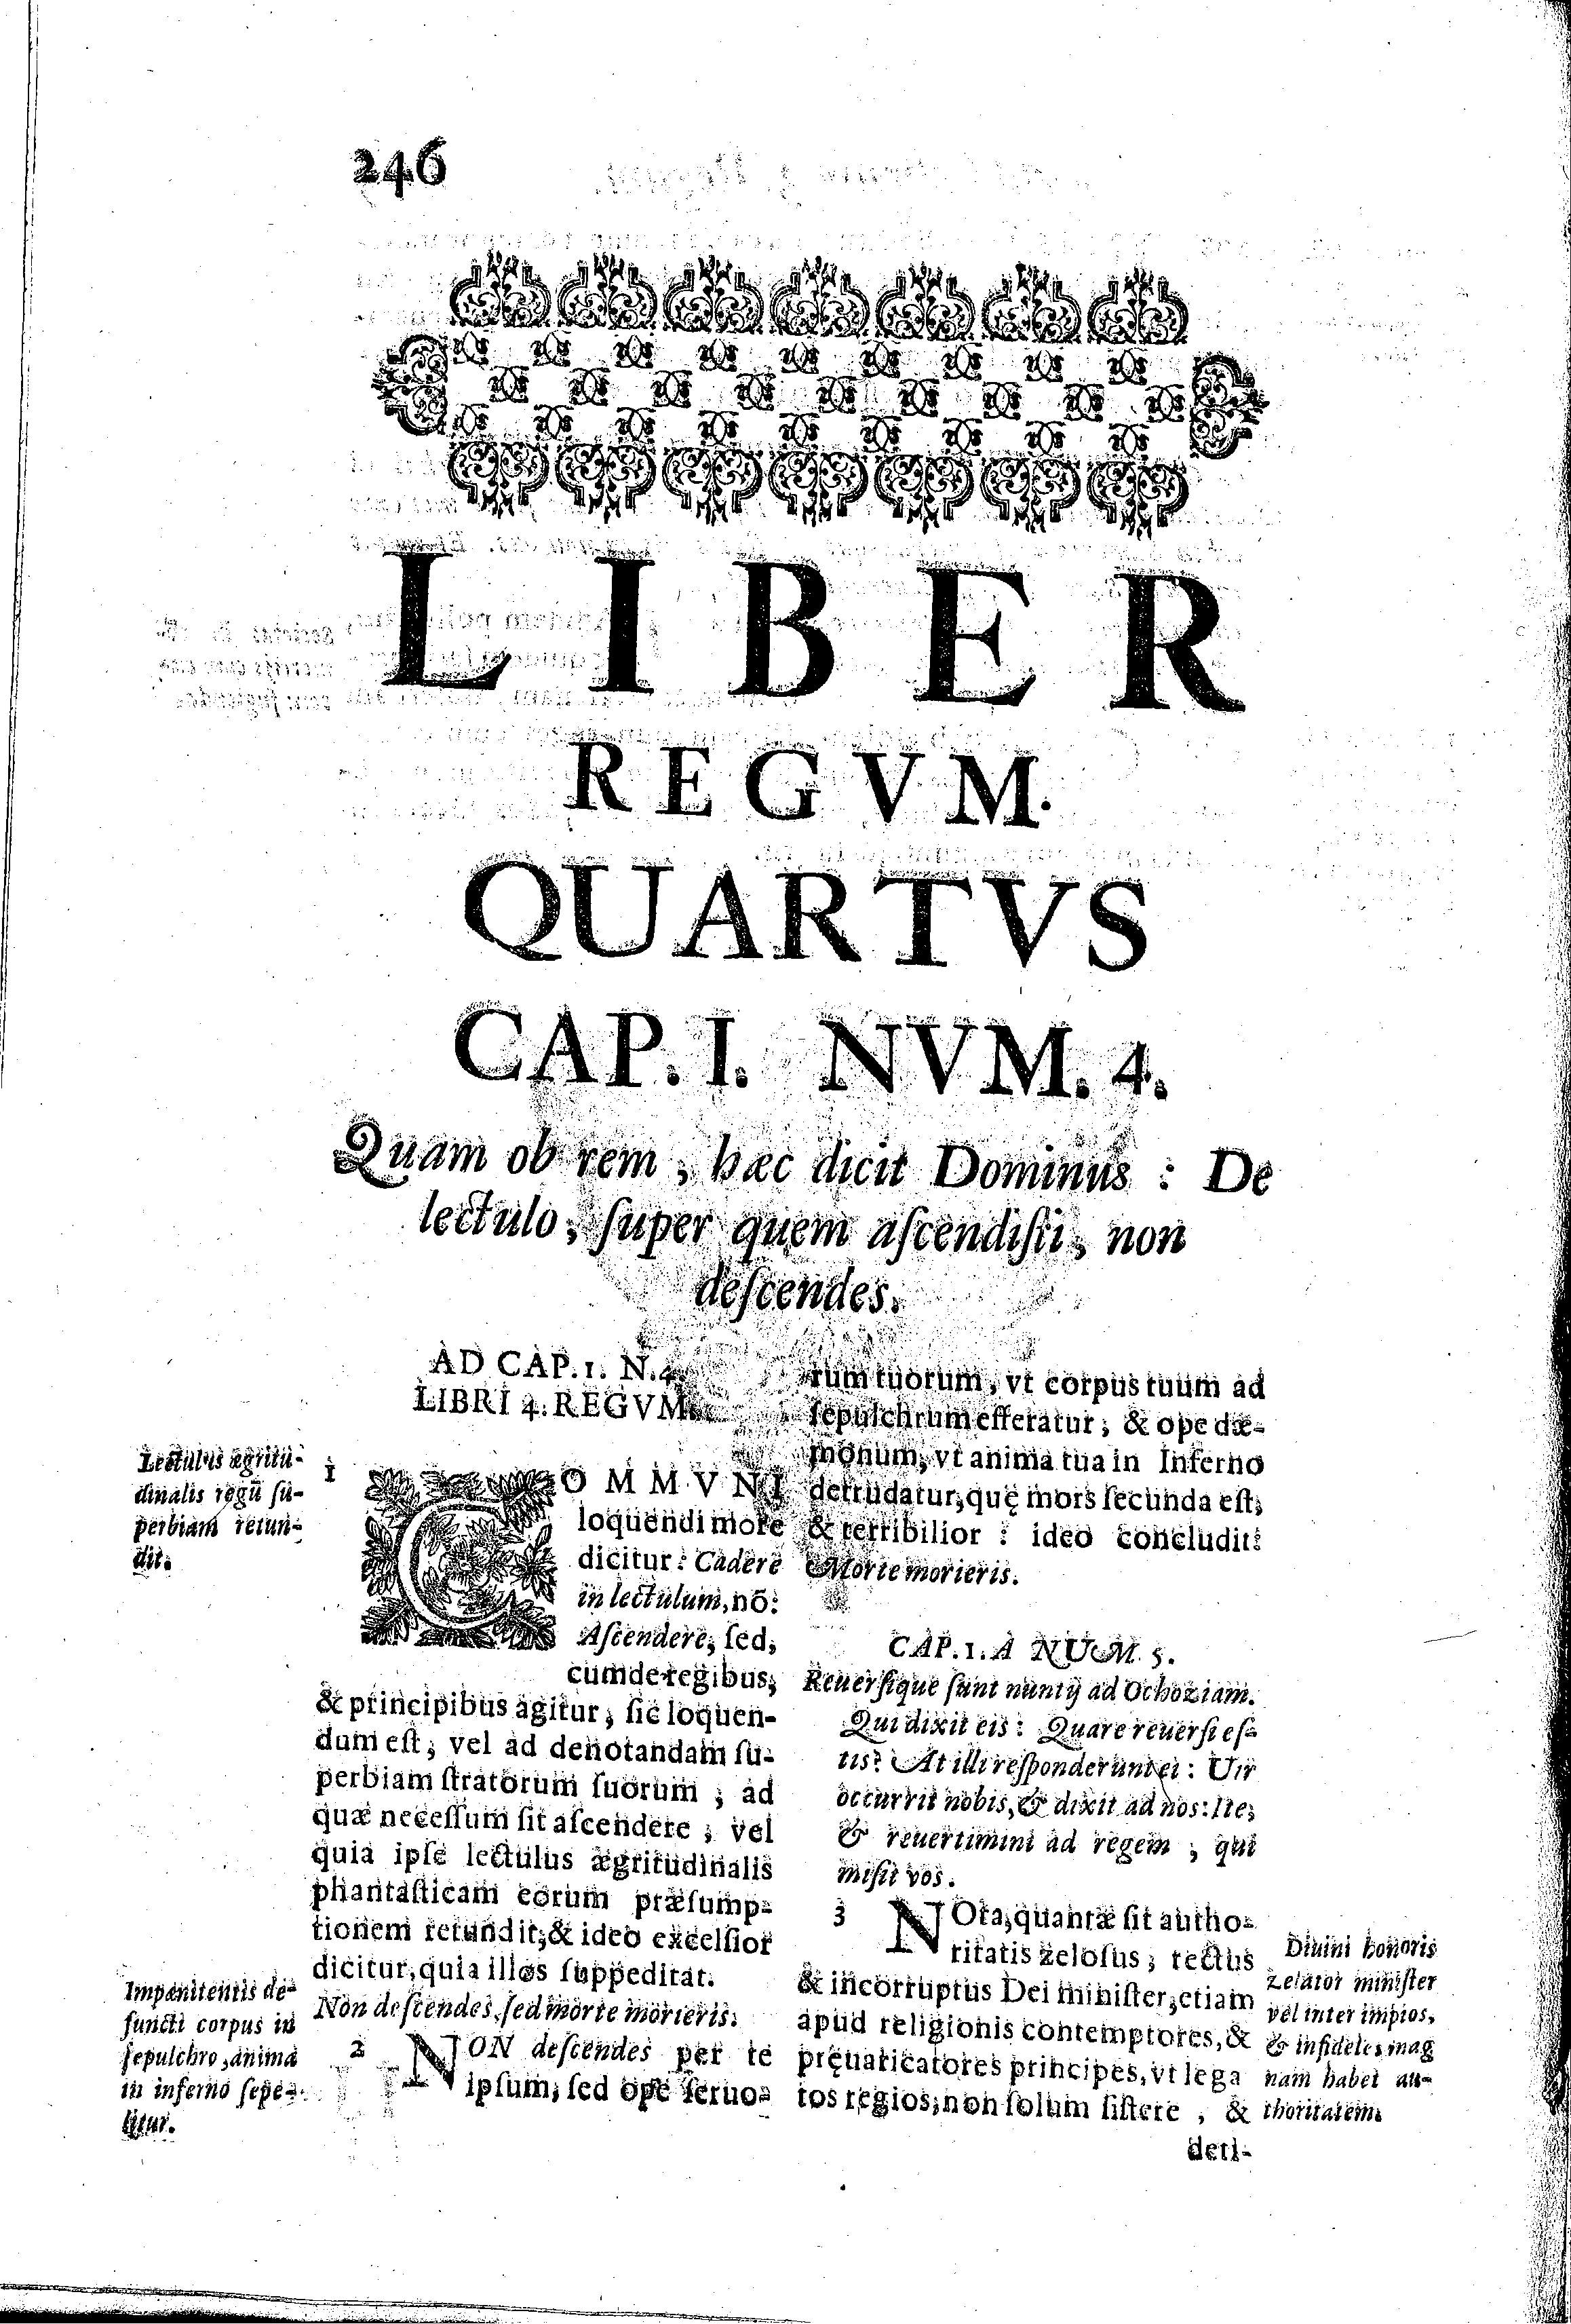 Liber Regvm Quartvs. Cap.I. Nvm.4. Quam ob rem, haec dicit Dominus 